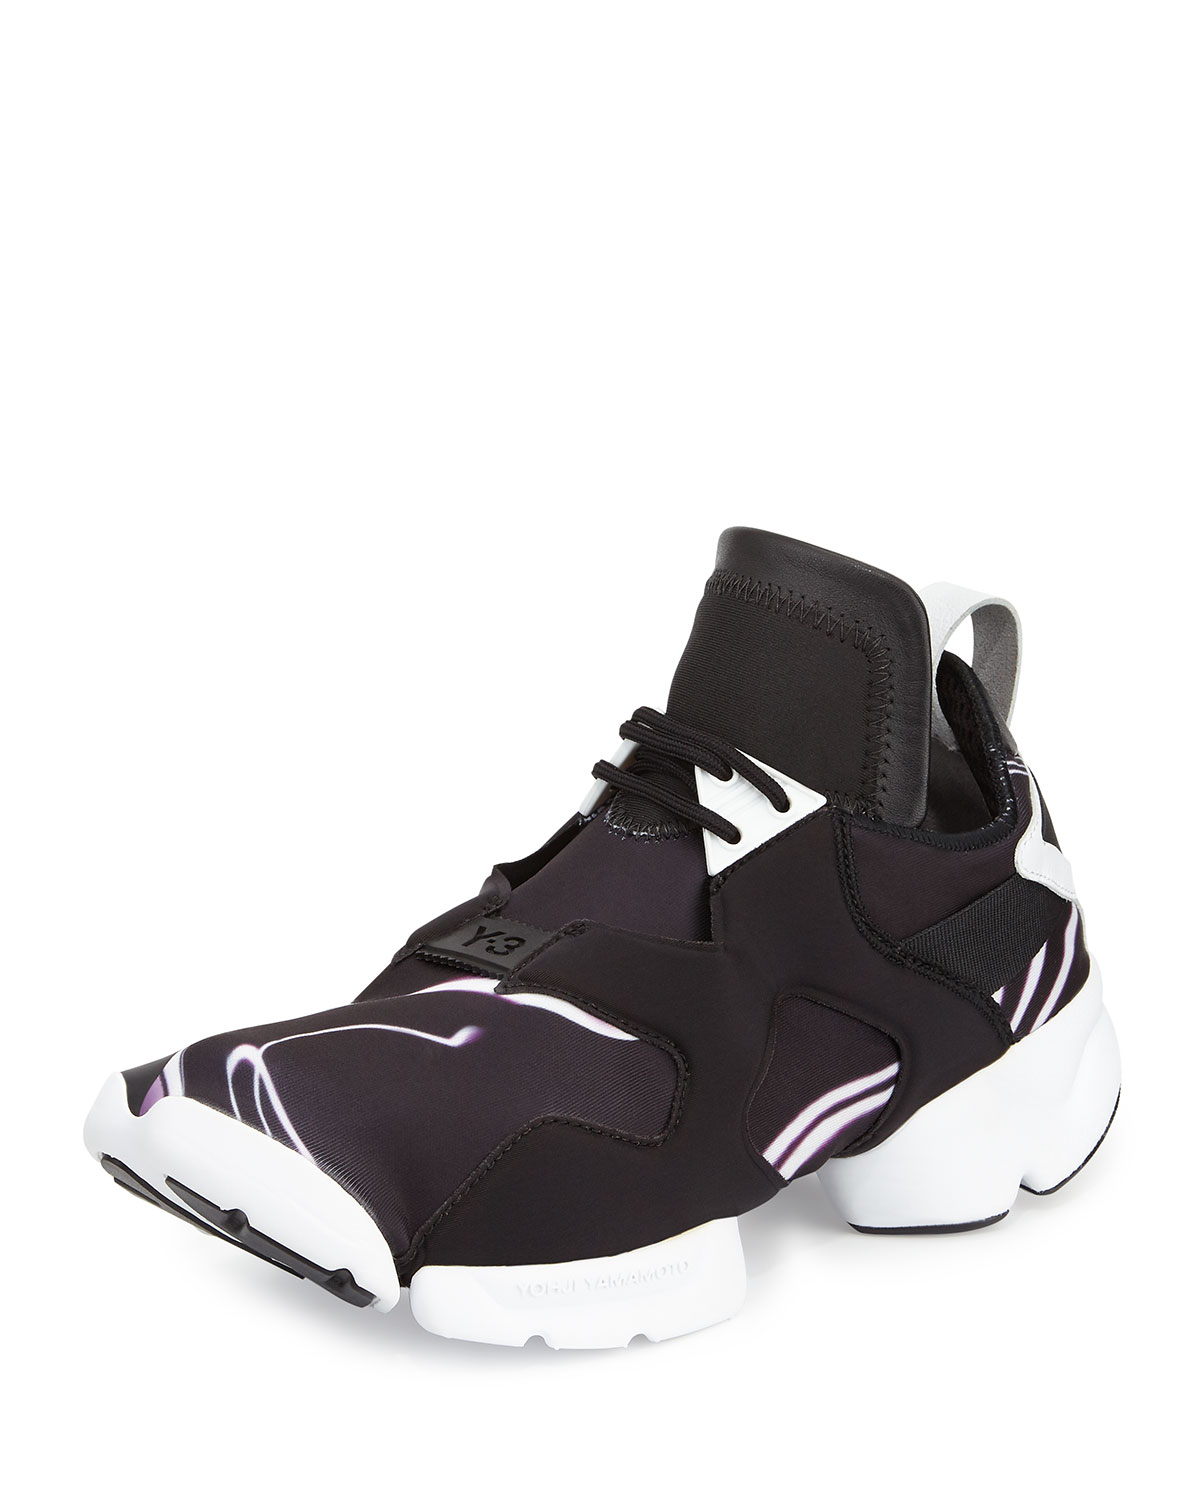 Kohna Lightning-Print Leather Sneaker, Black/White Purple